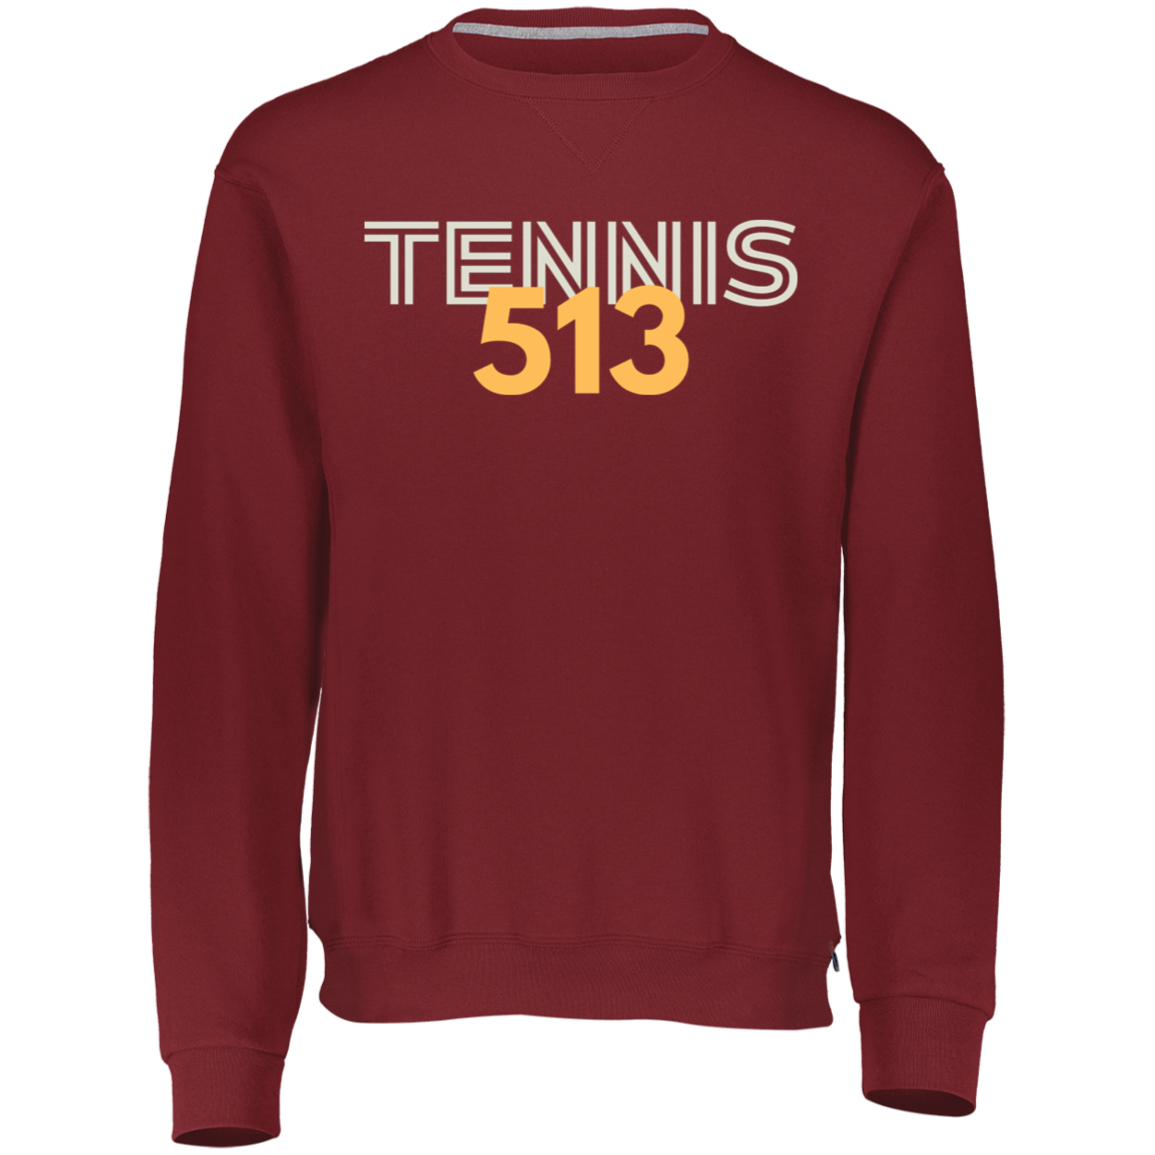 Tennis 513 Fleece Crewneck Sweatshirt